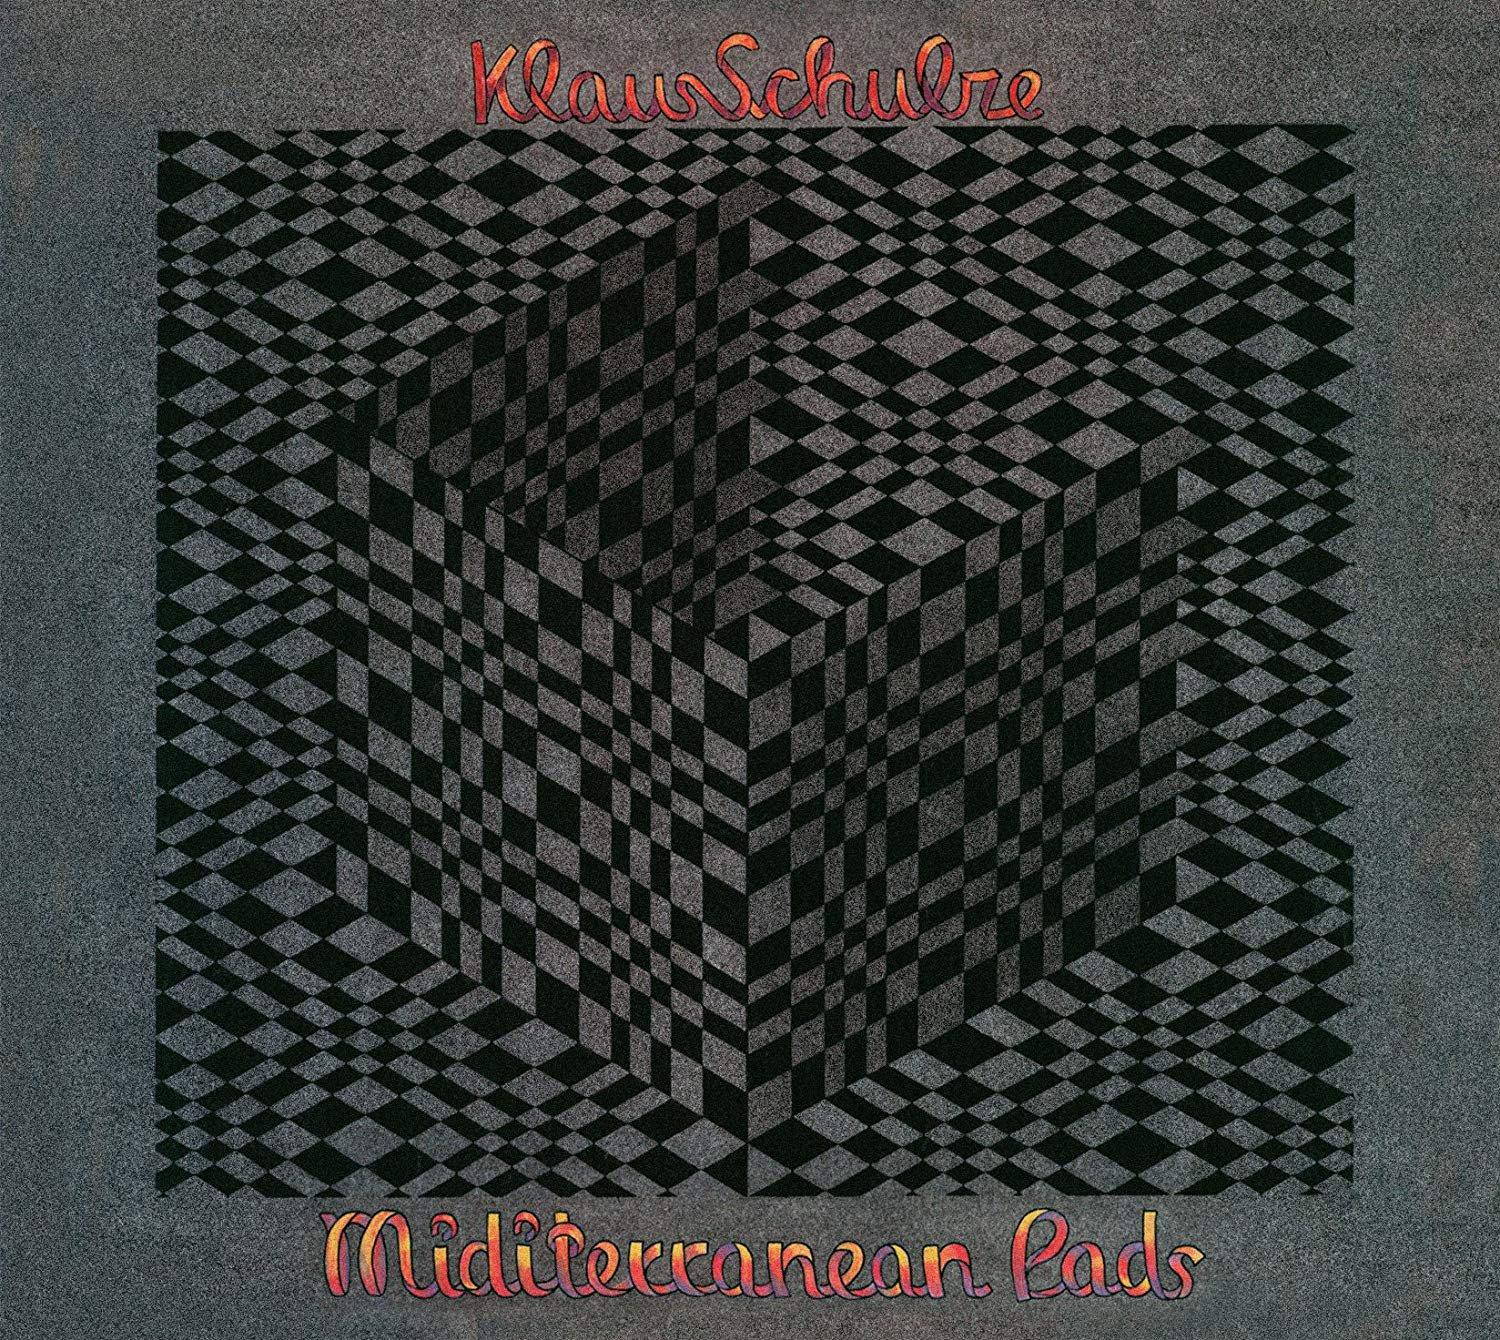 Klaus Schulze - Miditerranean Pads (CD) 